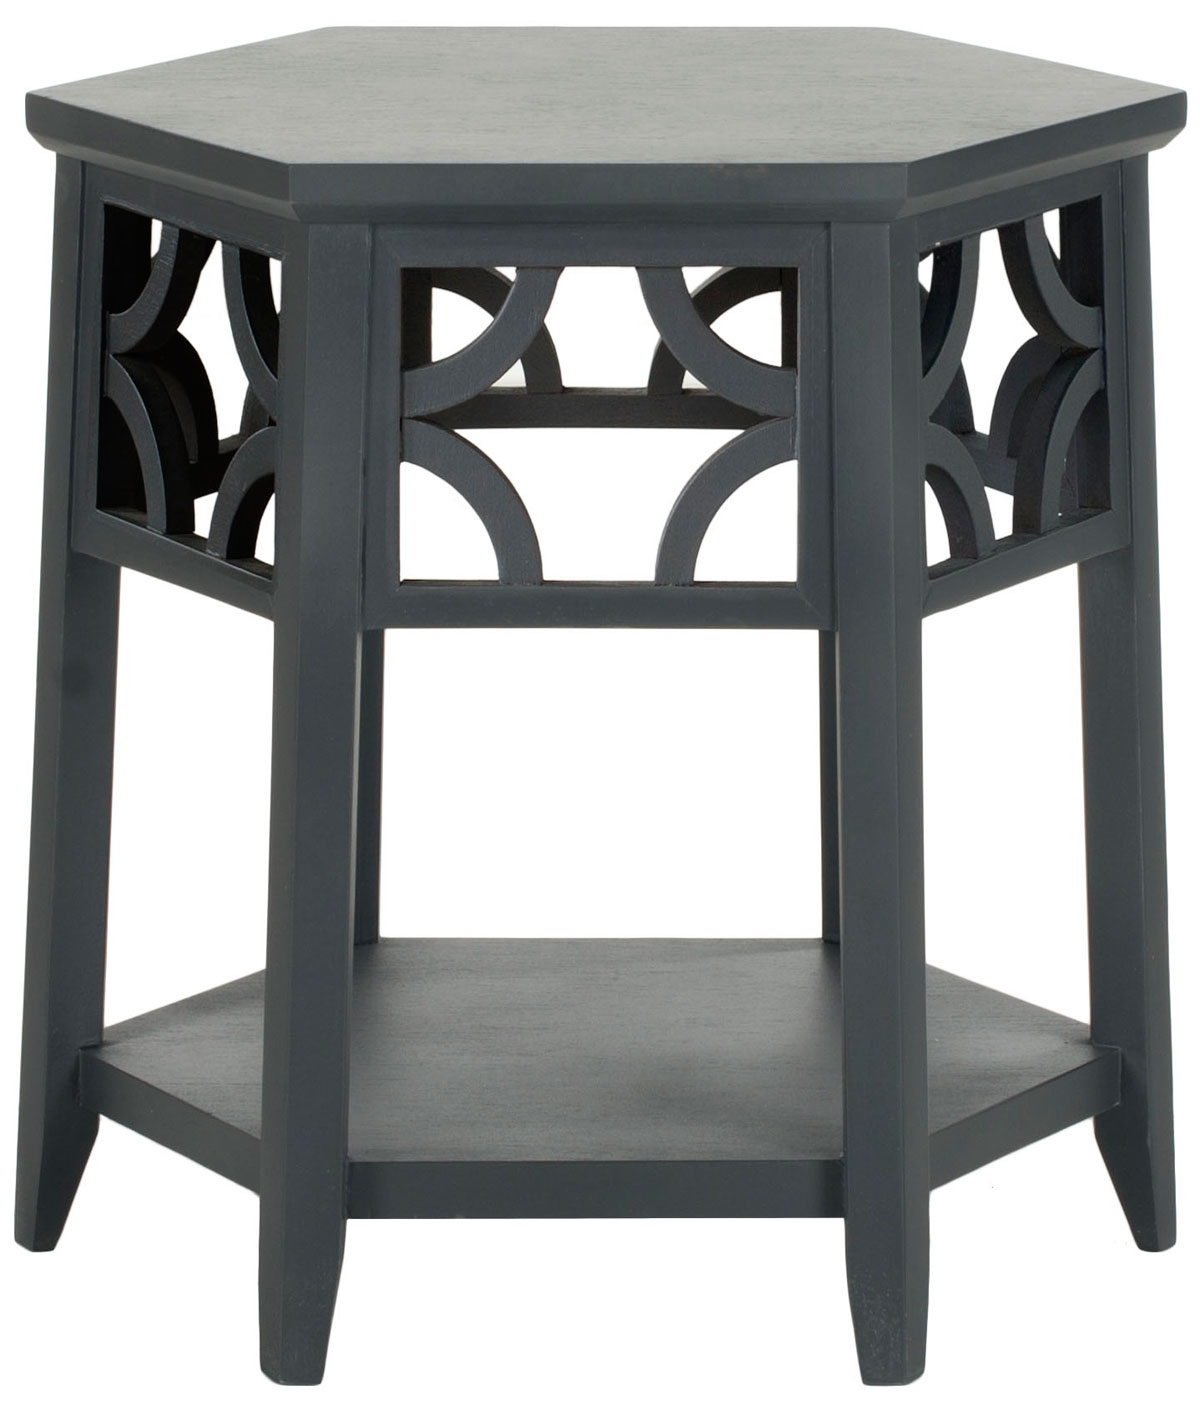 Connr Hexagon End Table - Charcoal Grey - Arlo Home - Image 0